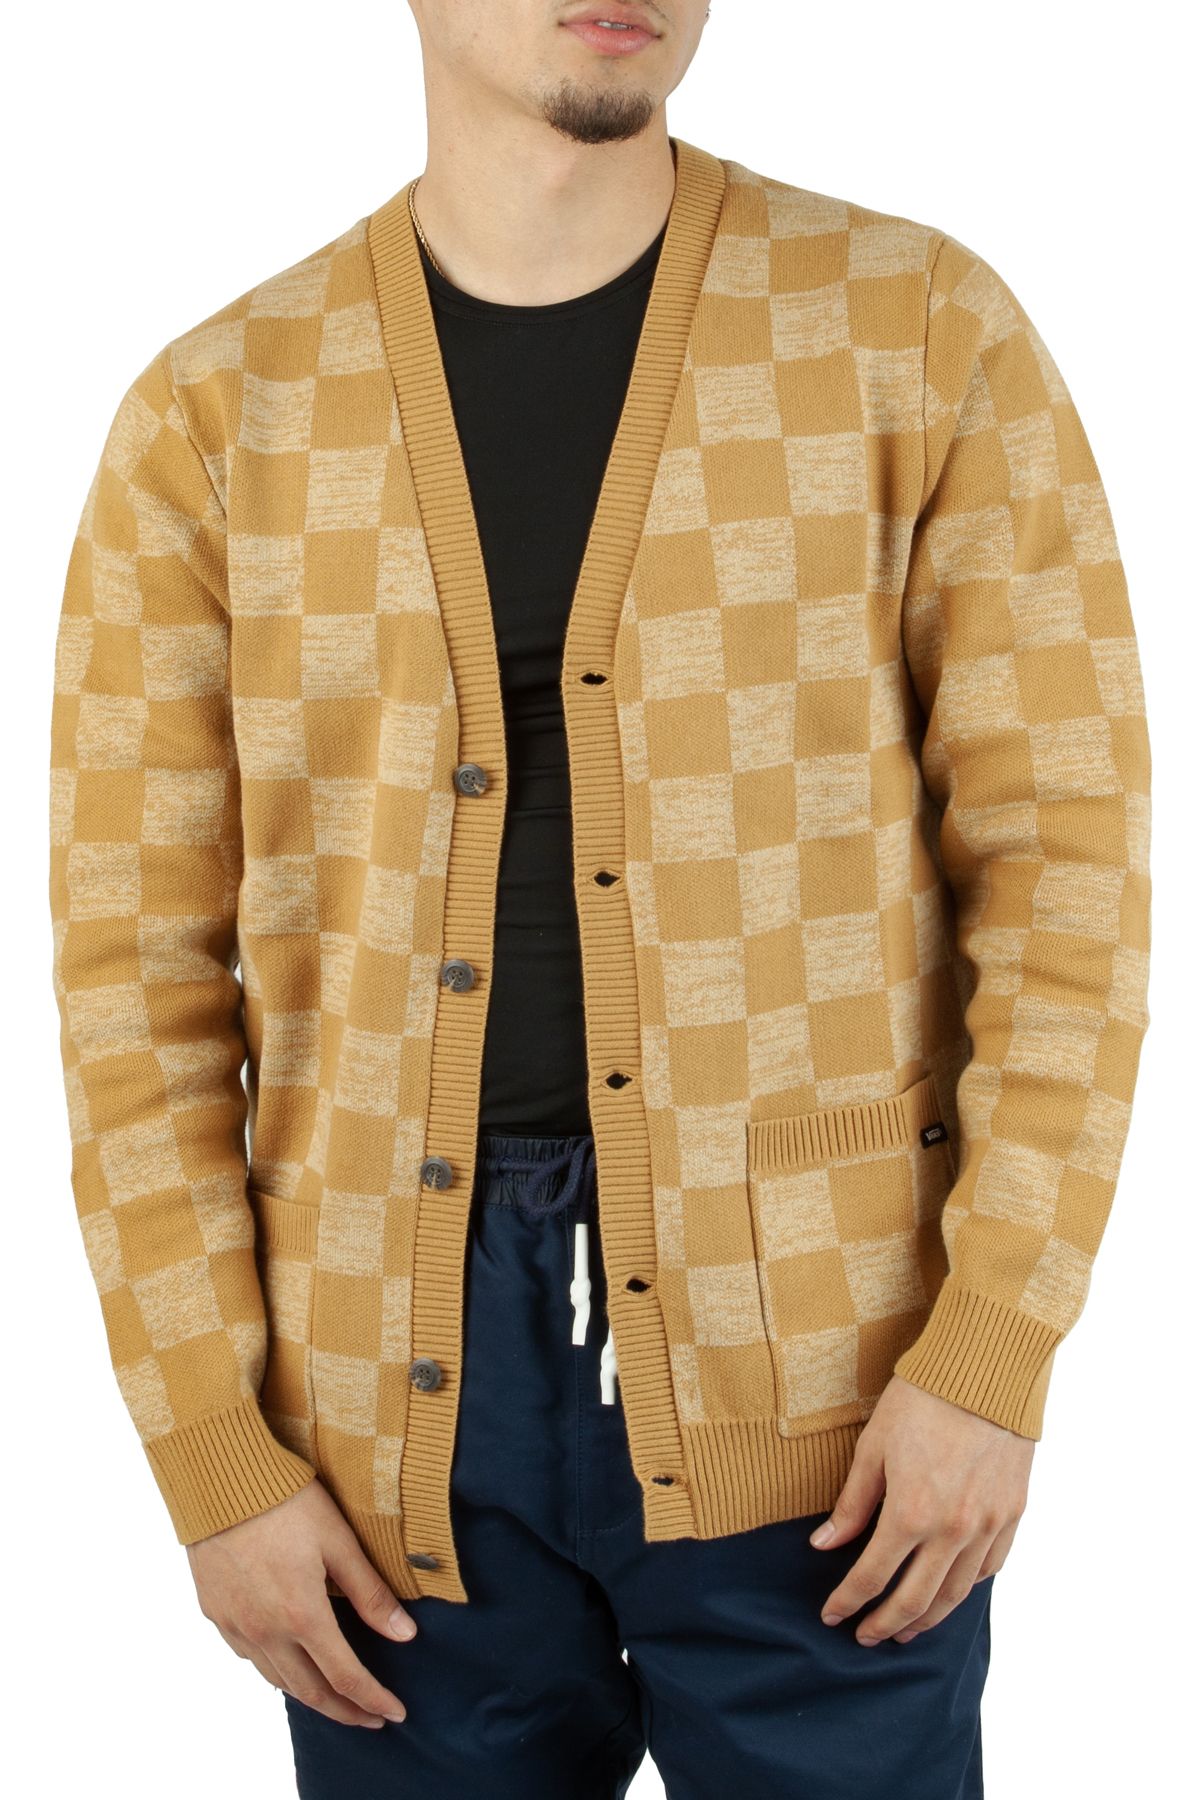 Vans Men's Checkerboard Jacquard Cardigan, Large, Bone Brown